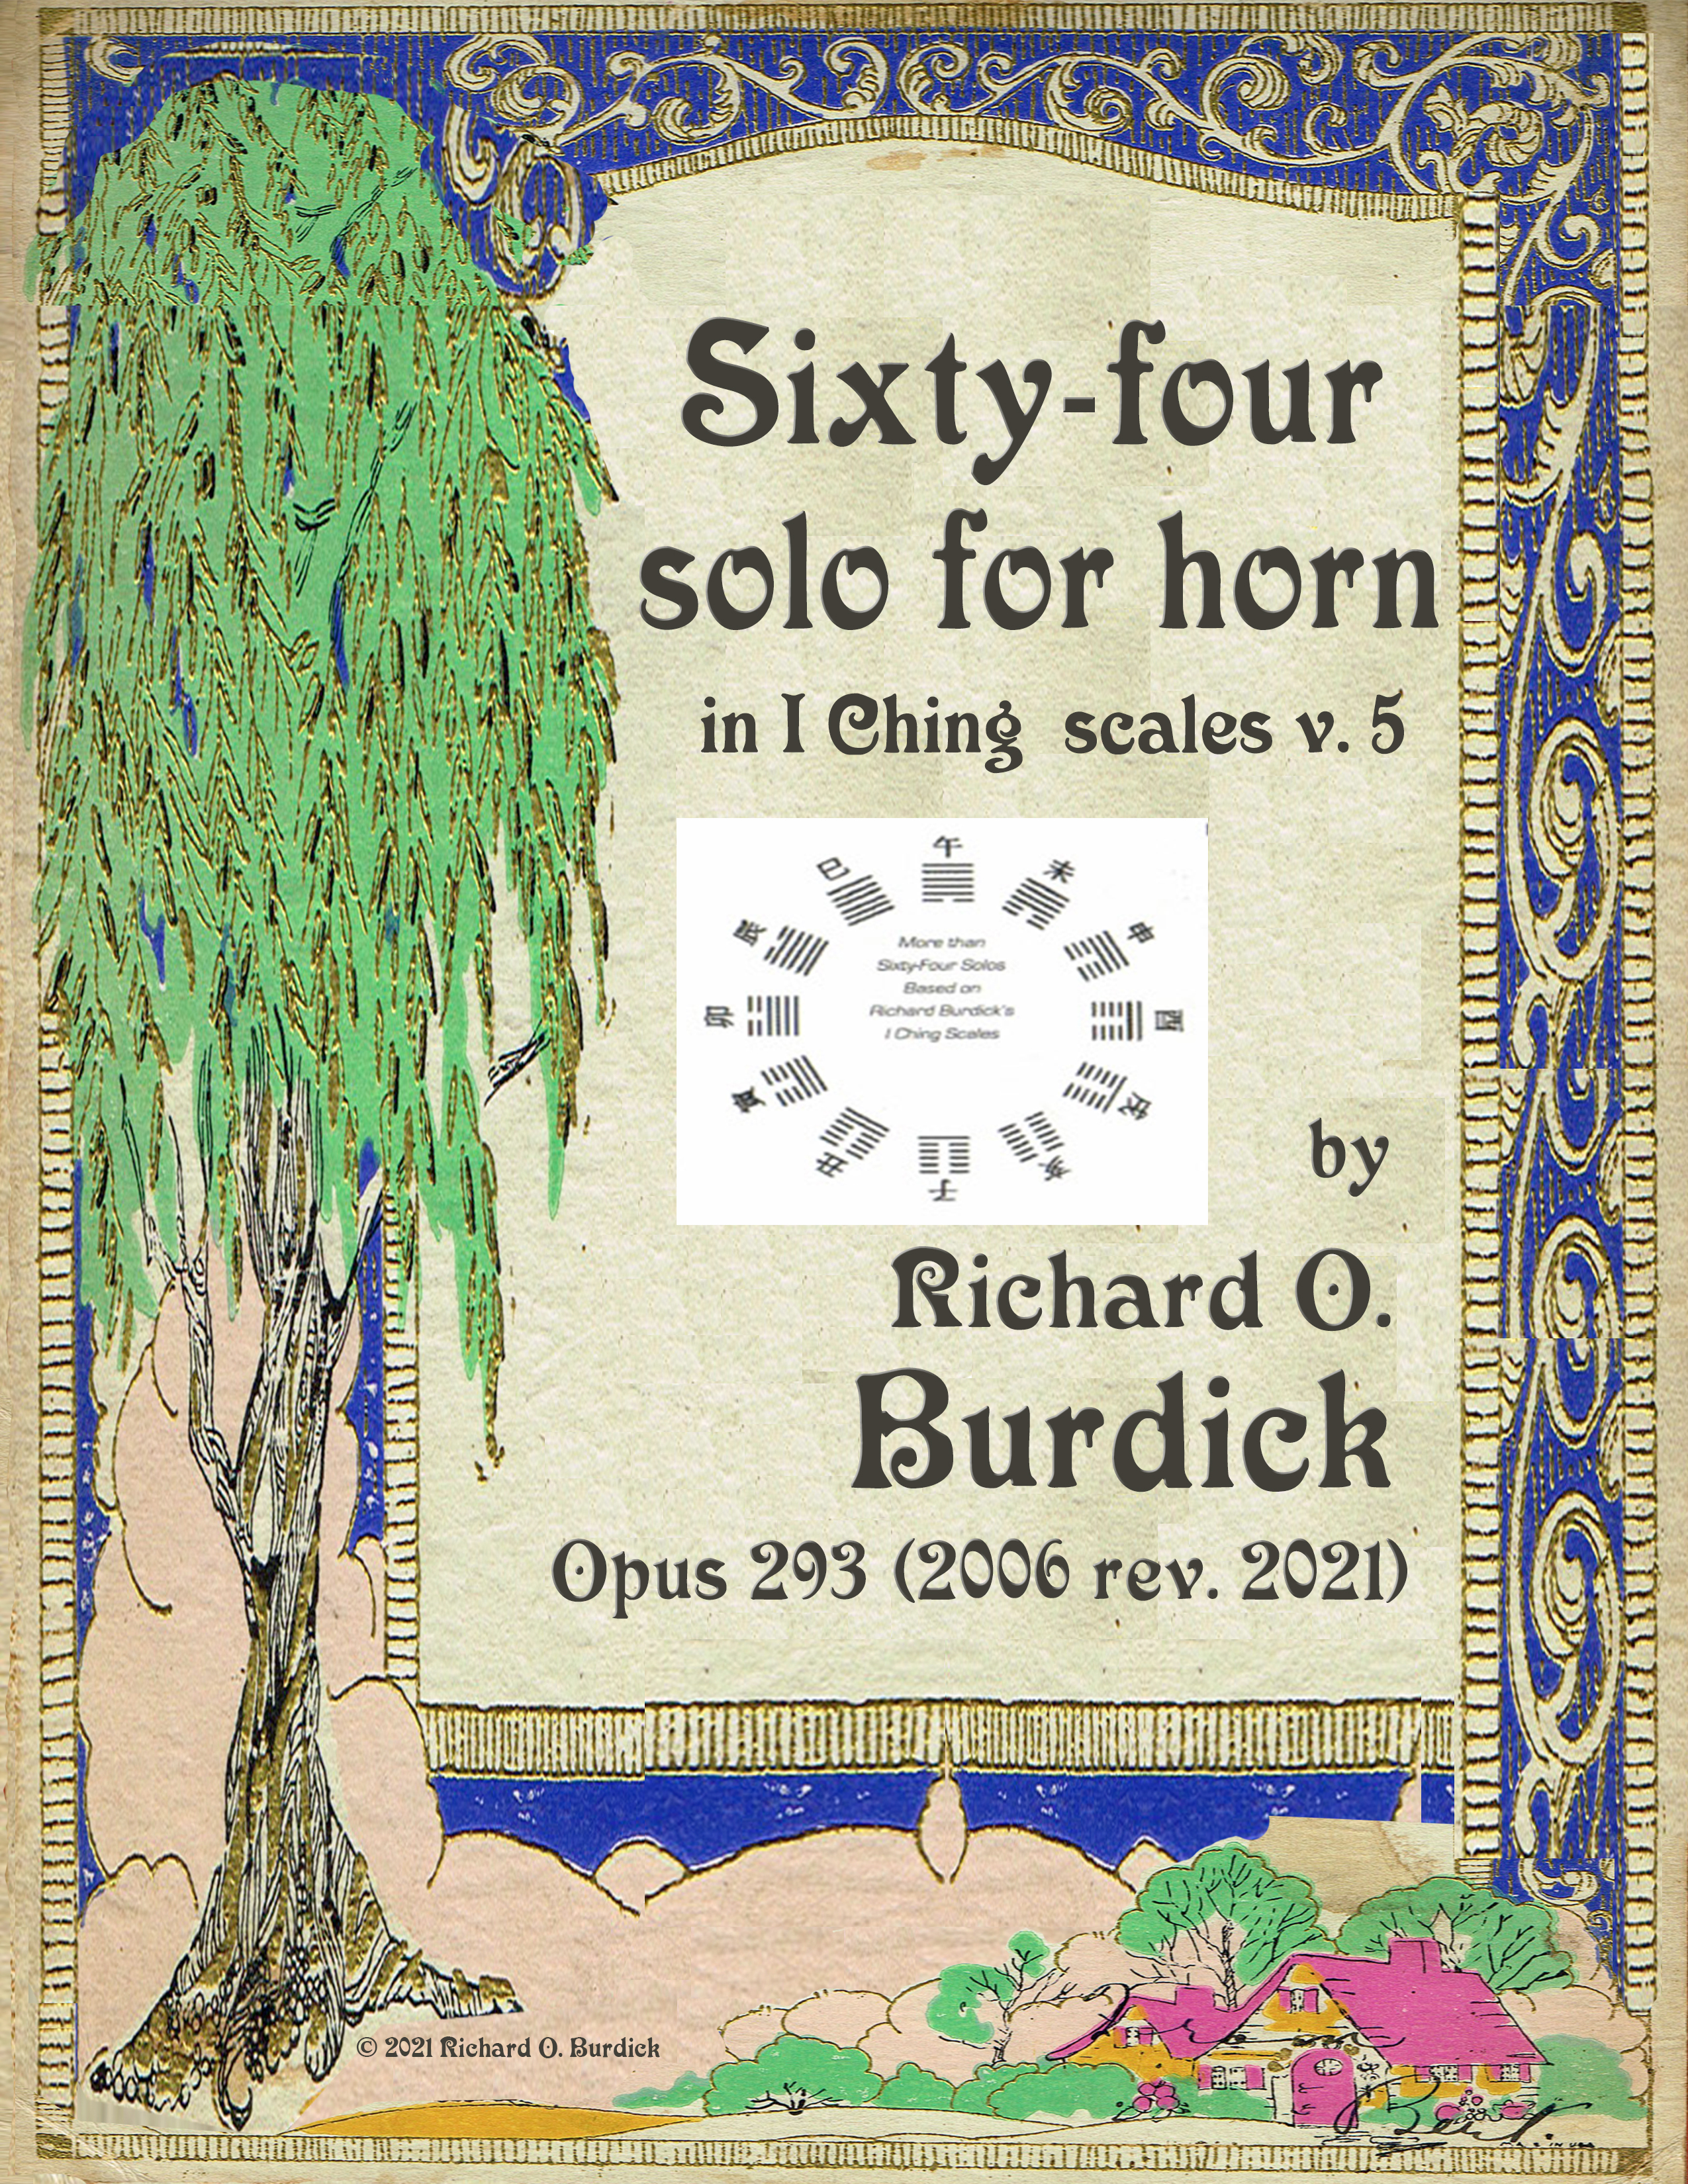 Burdick's Op. 293 sheet music cover